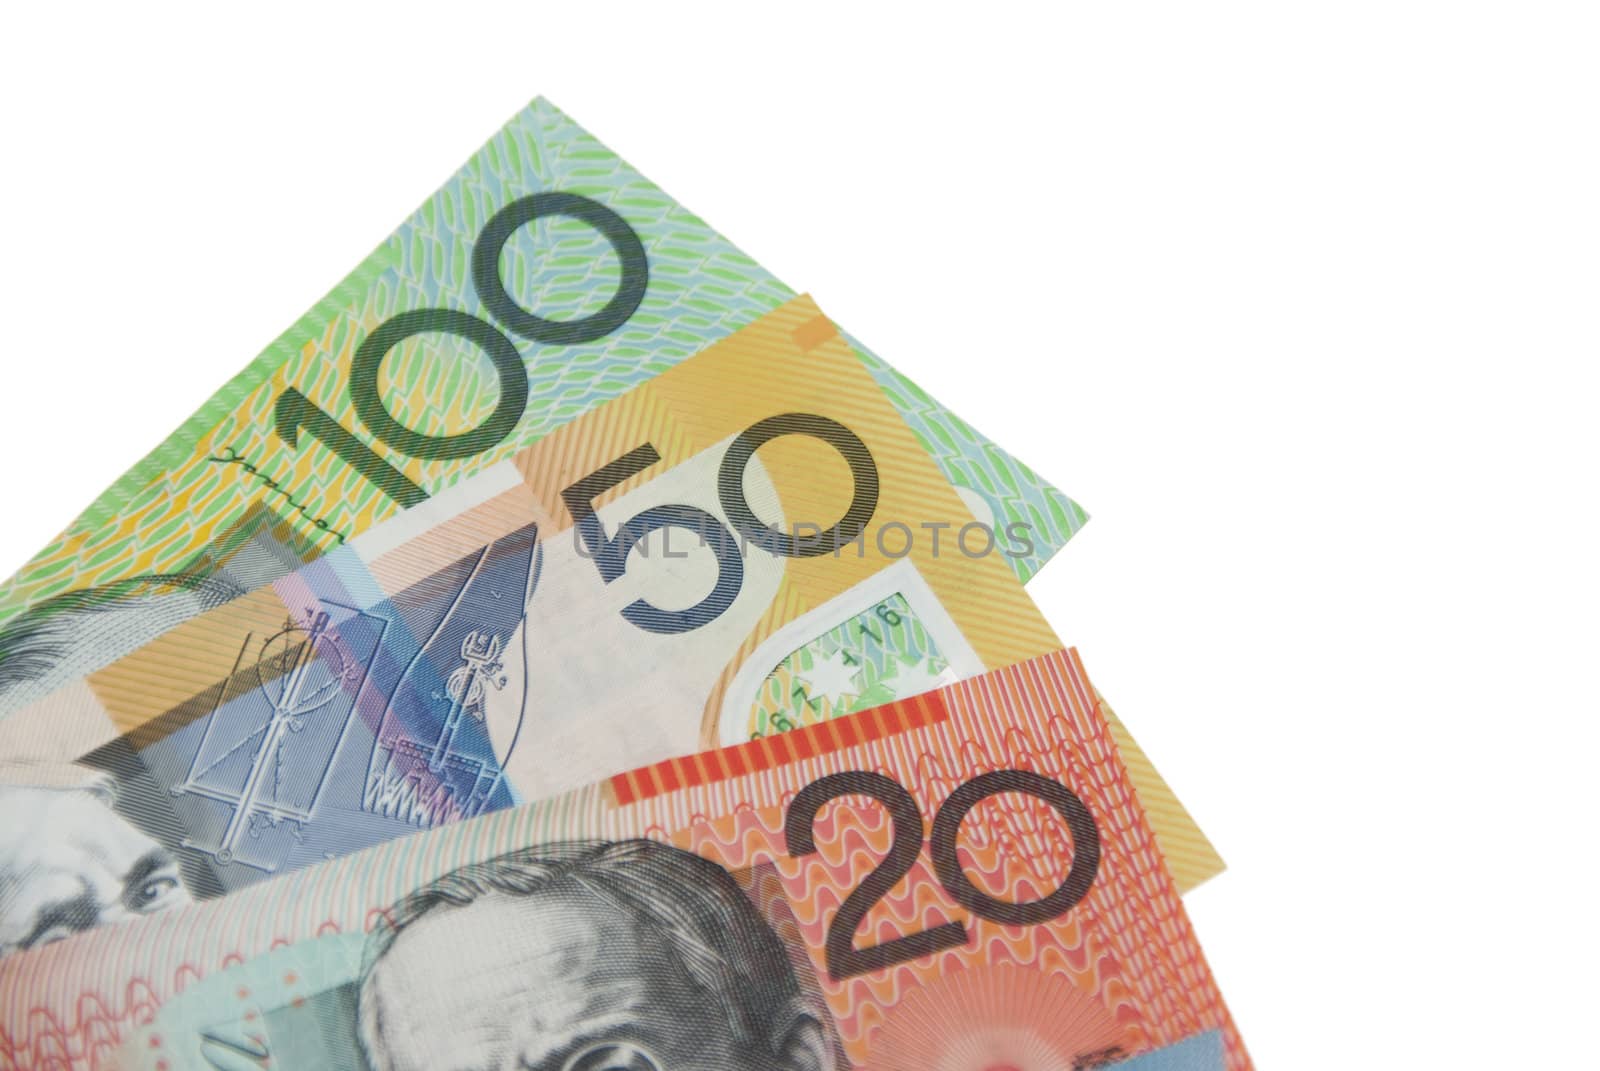 Australian Bank notes isolated on white background by wojciechkozlowski